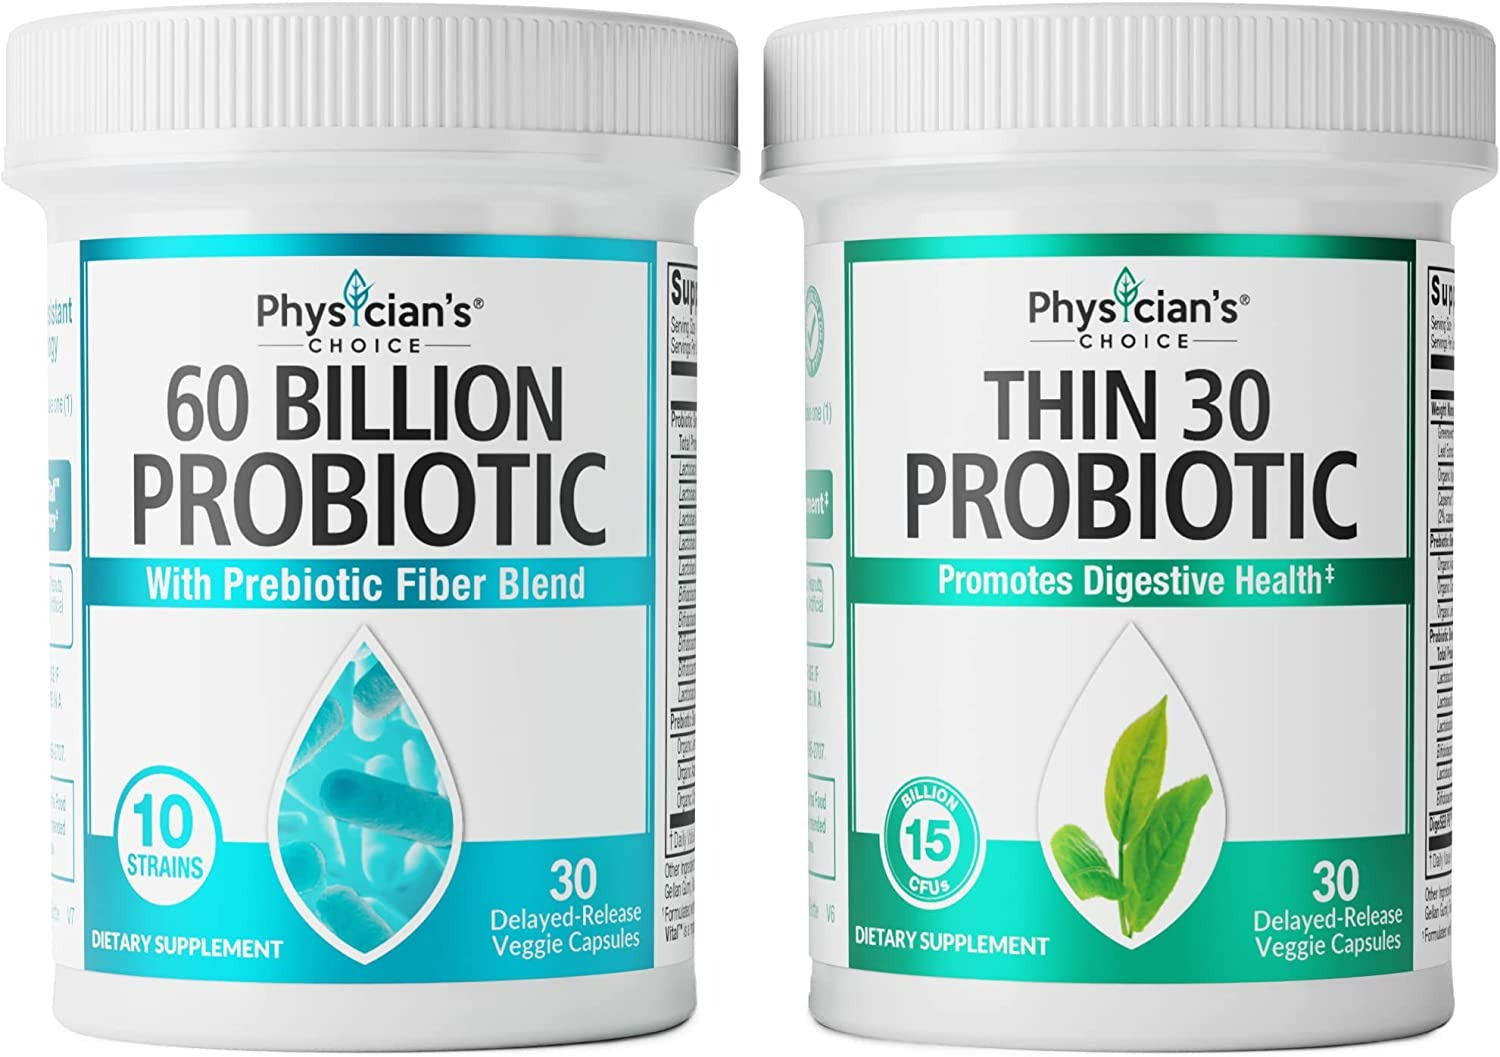 Physician's Choice 60 Billion Probiotic and Thin - 30 Probiotic Bundle